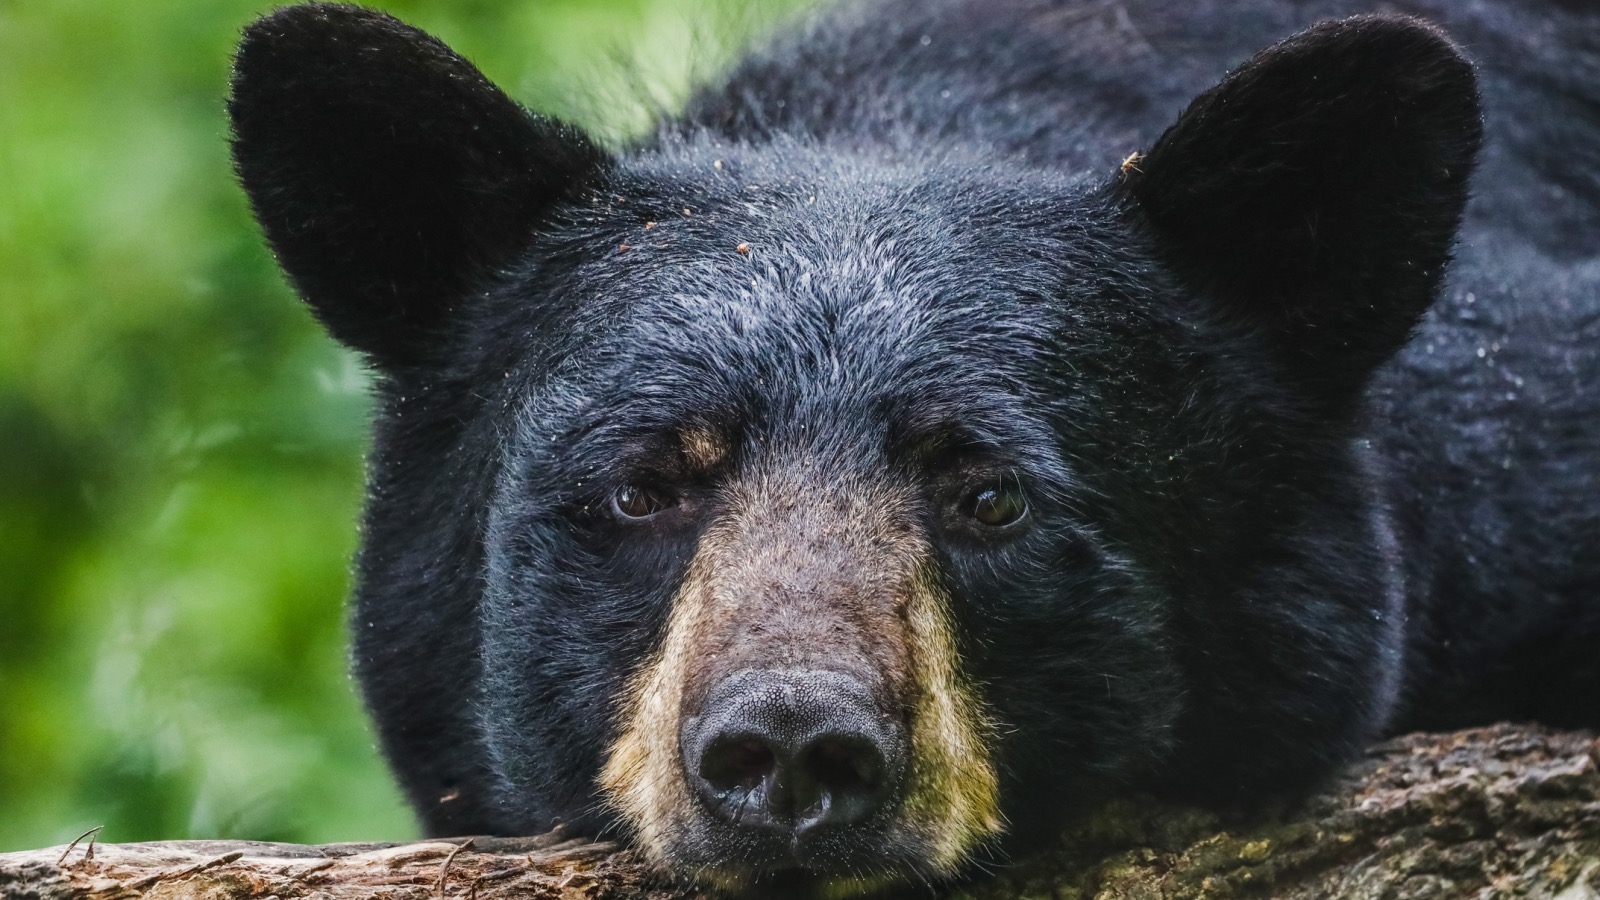 black bear leaning on a log